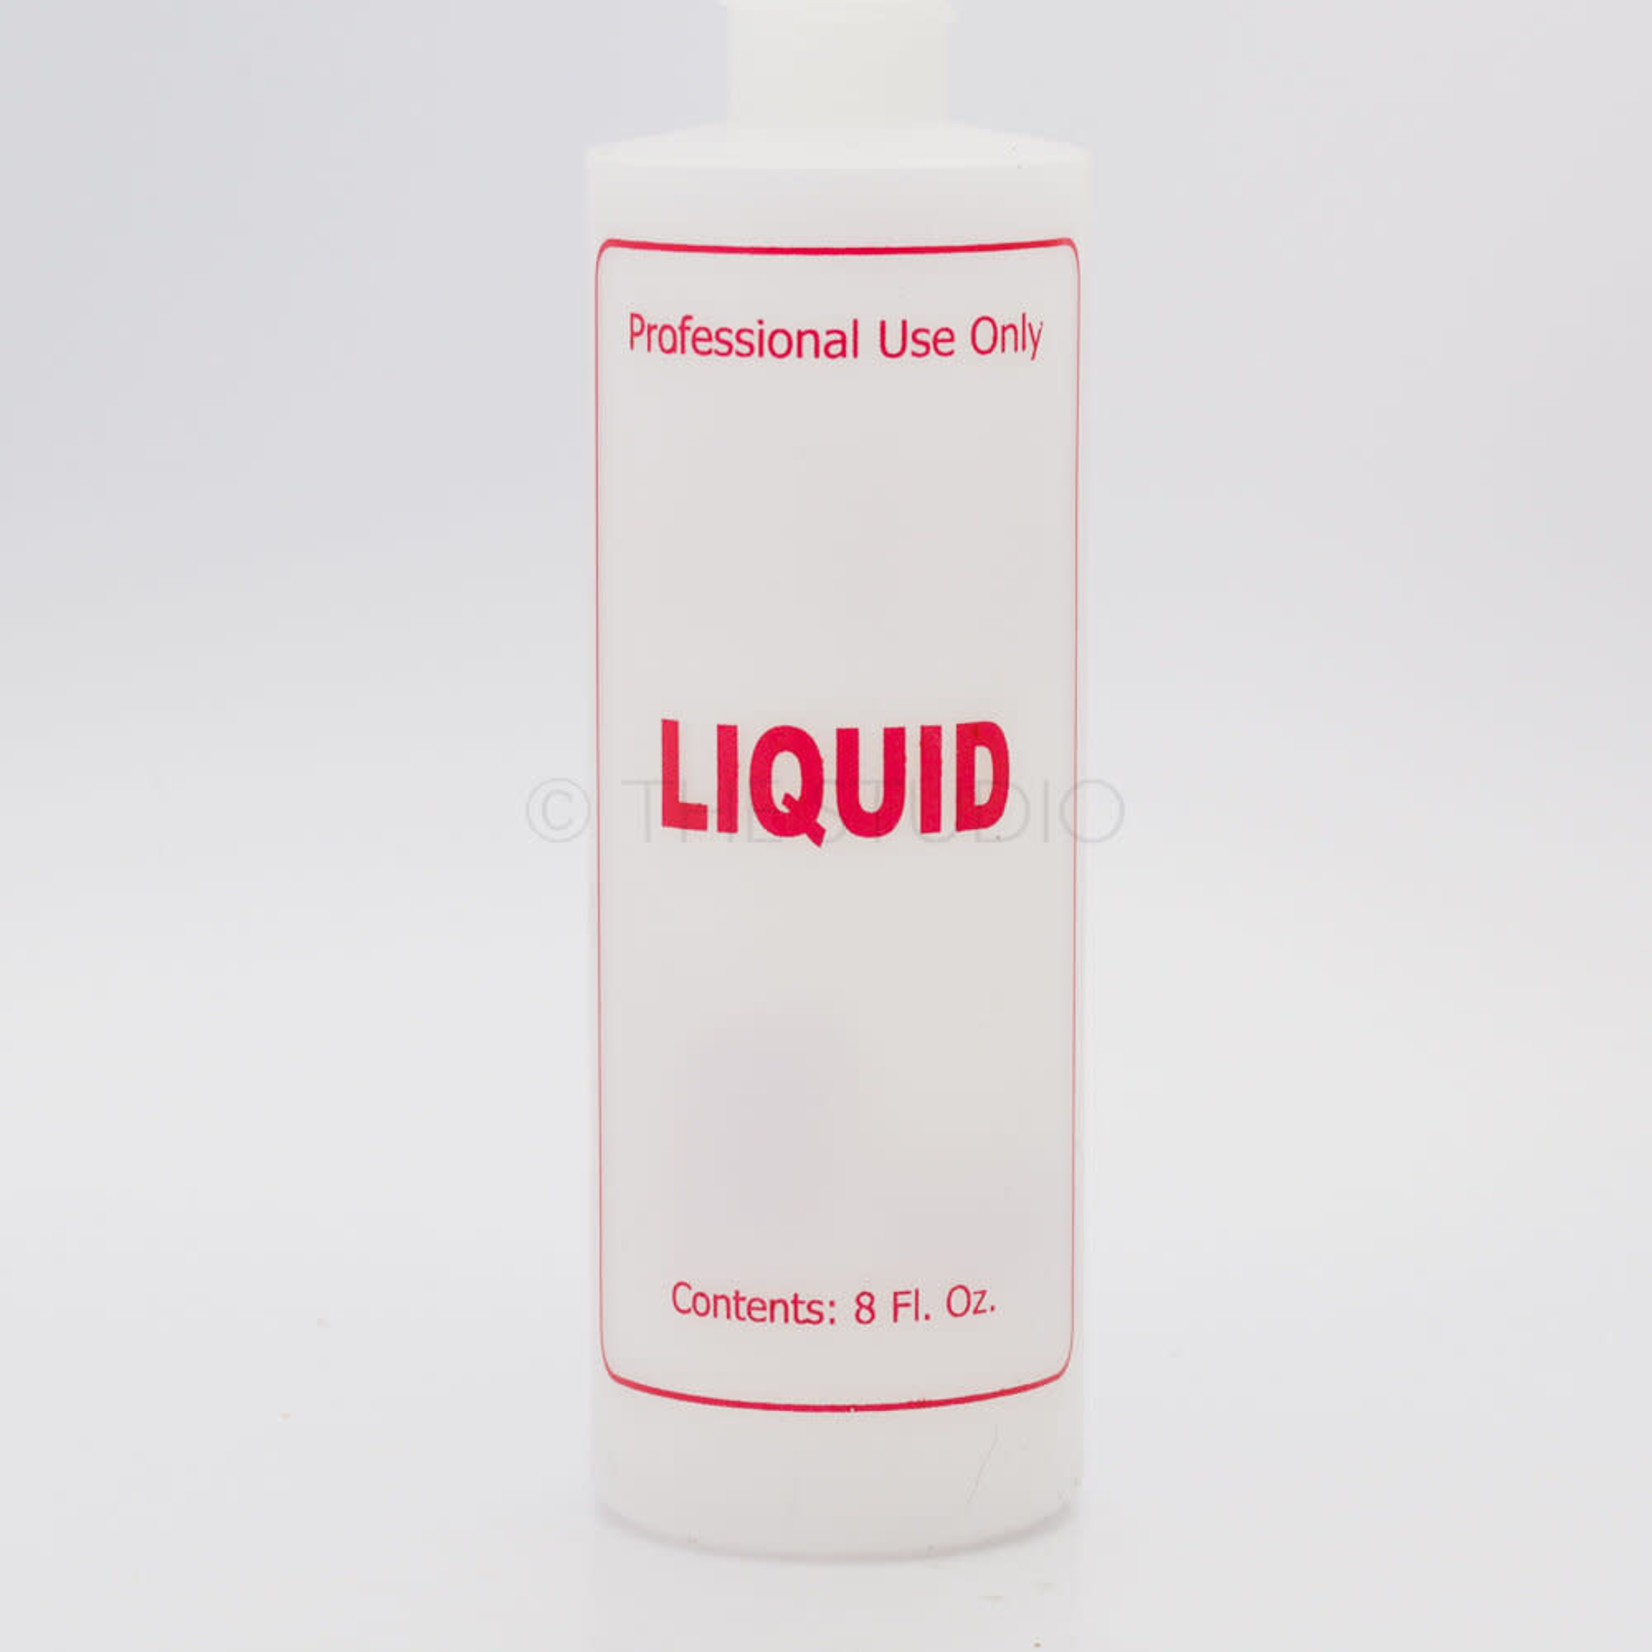 Liquid Monomer - Plastic Bottle - 8 fl oz.